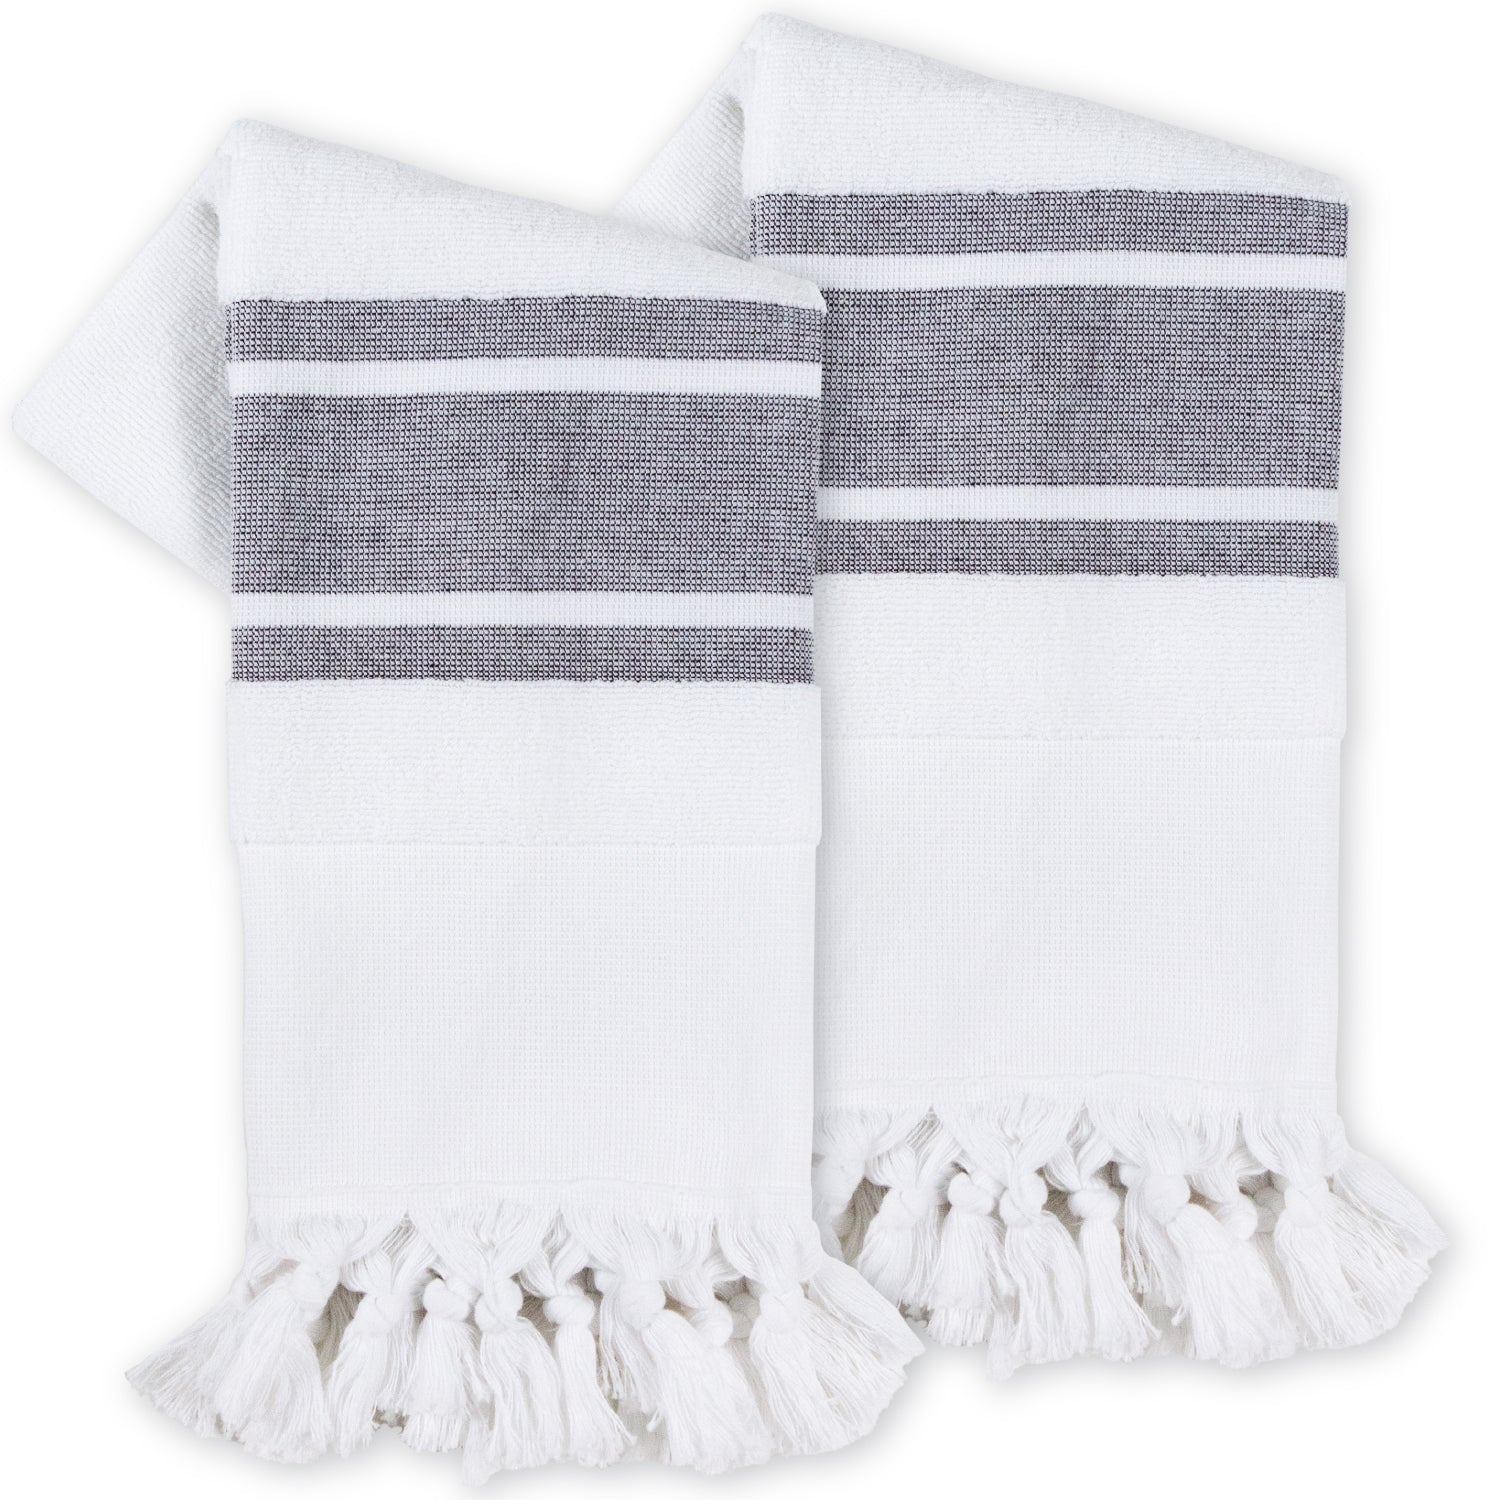 3 Piece Turkish Towel Set for Bathroom, 1 Bath Towel, 2 Hand Towels, Off  White Cotton Bath Towels with Black Stripes,Turkish Peshtemal Towel and  Hand